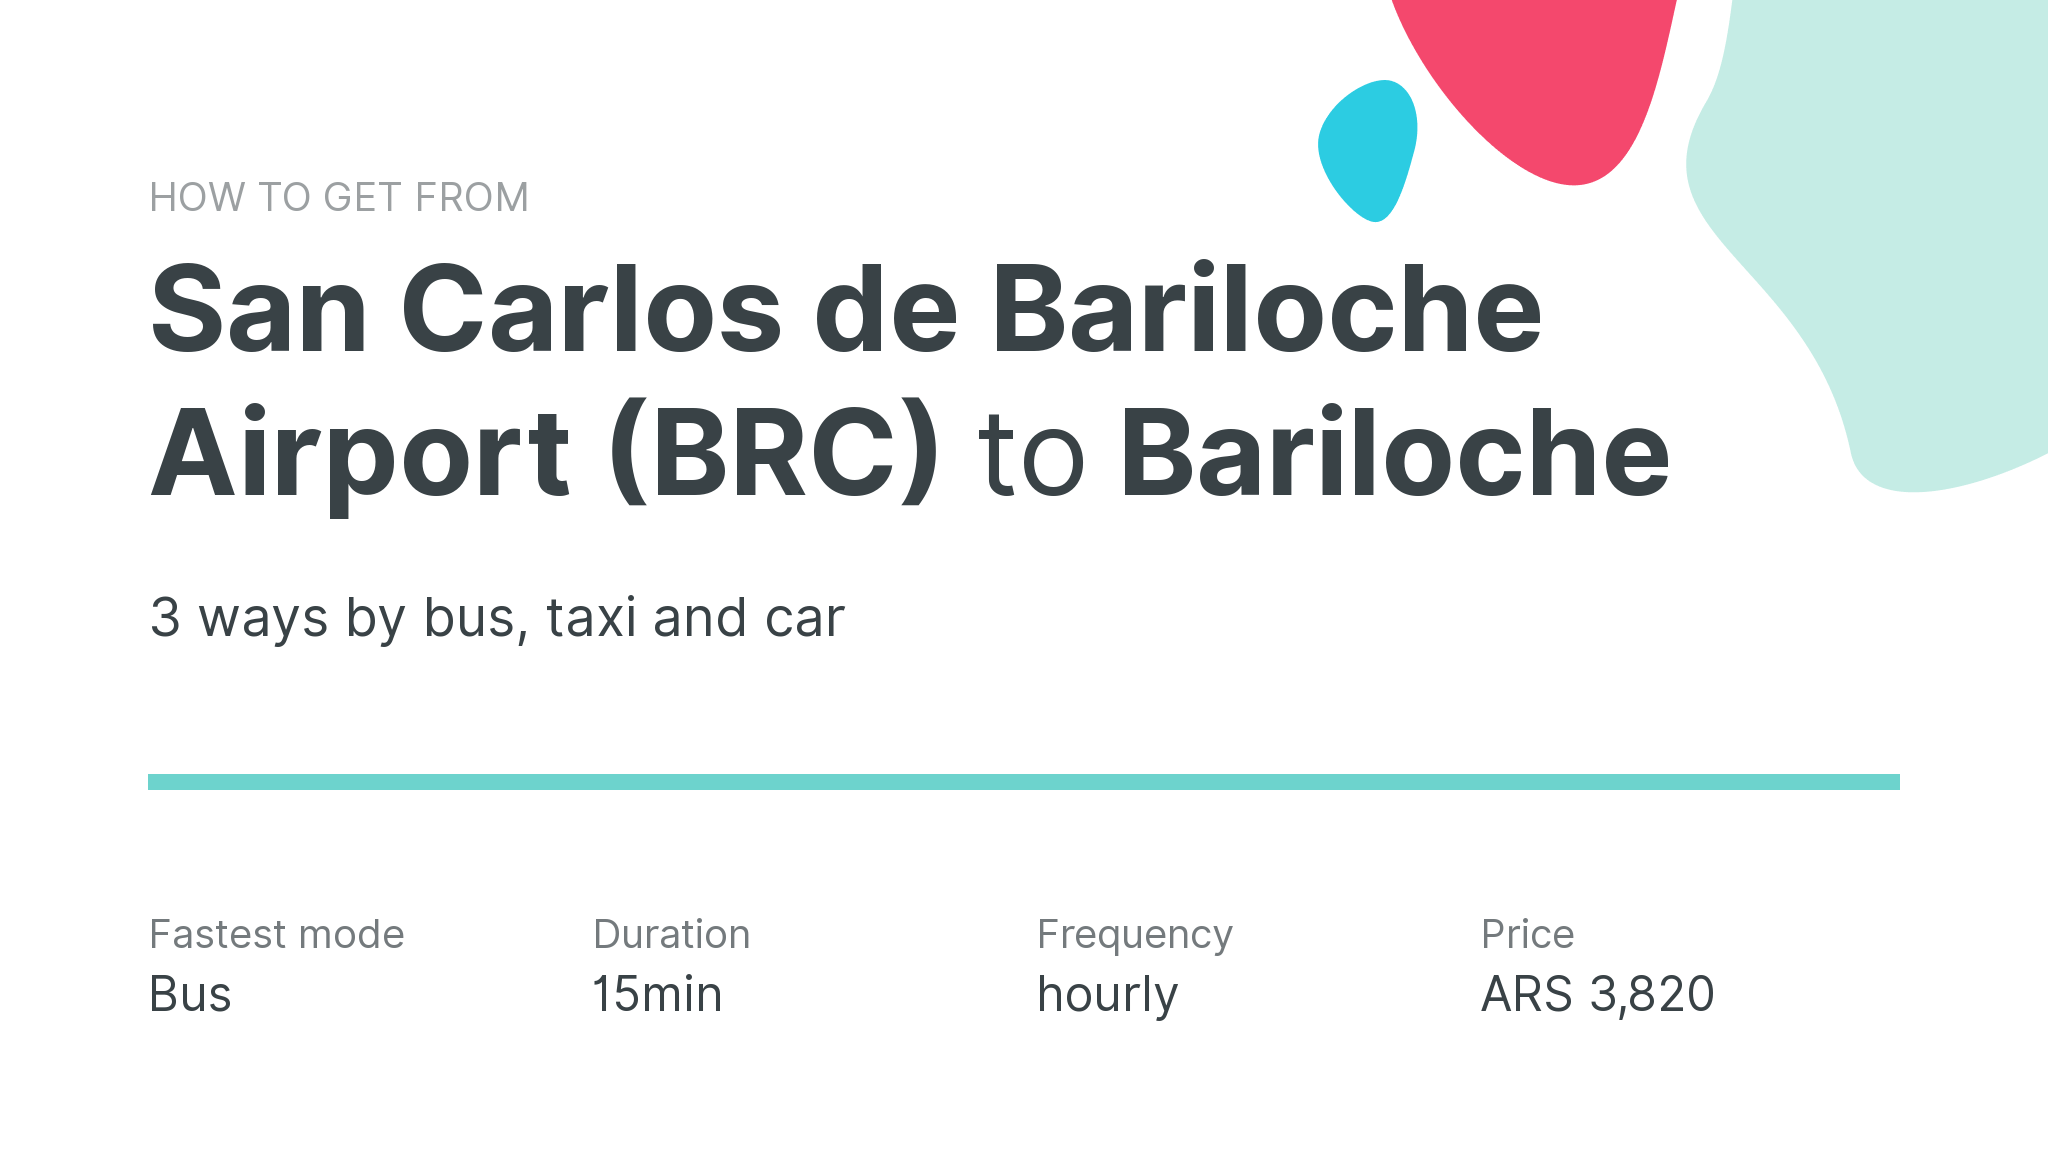 How do I get from San Carlos de Bariloche Airport (BRC) to Bariloche